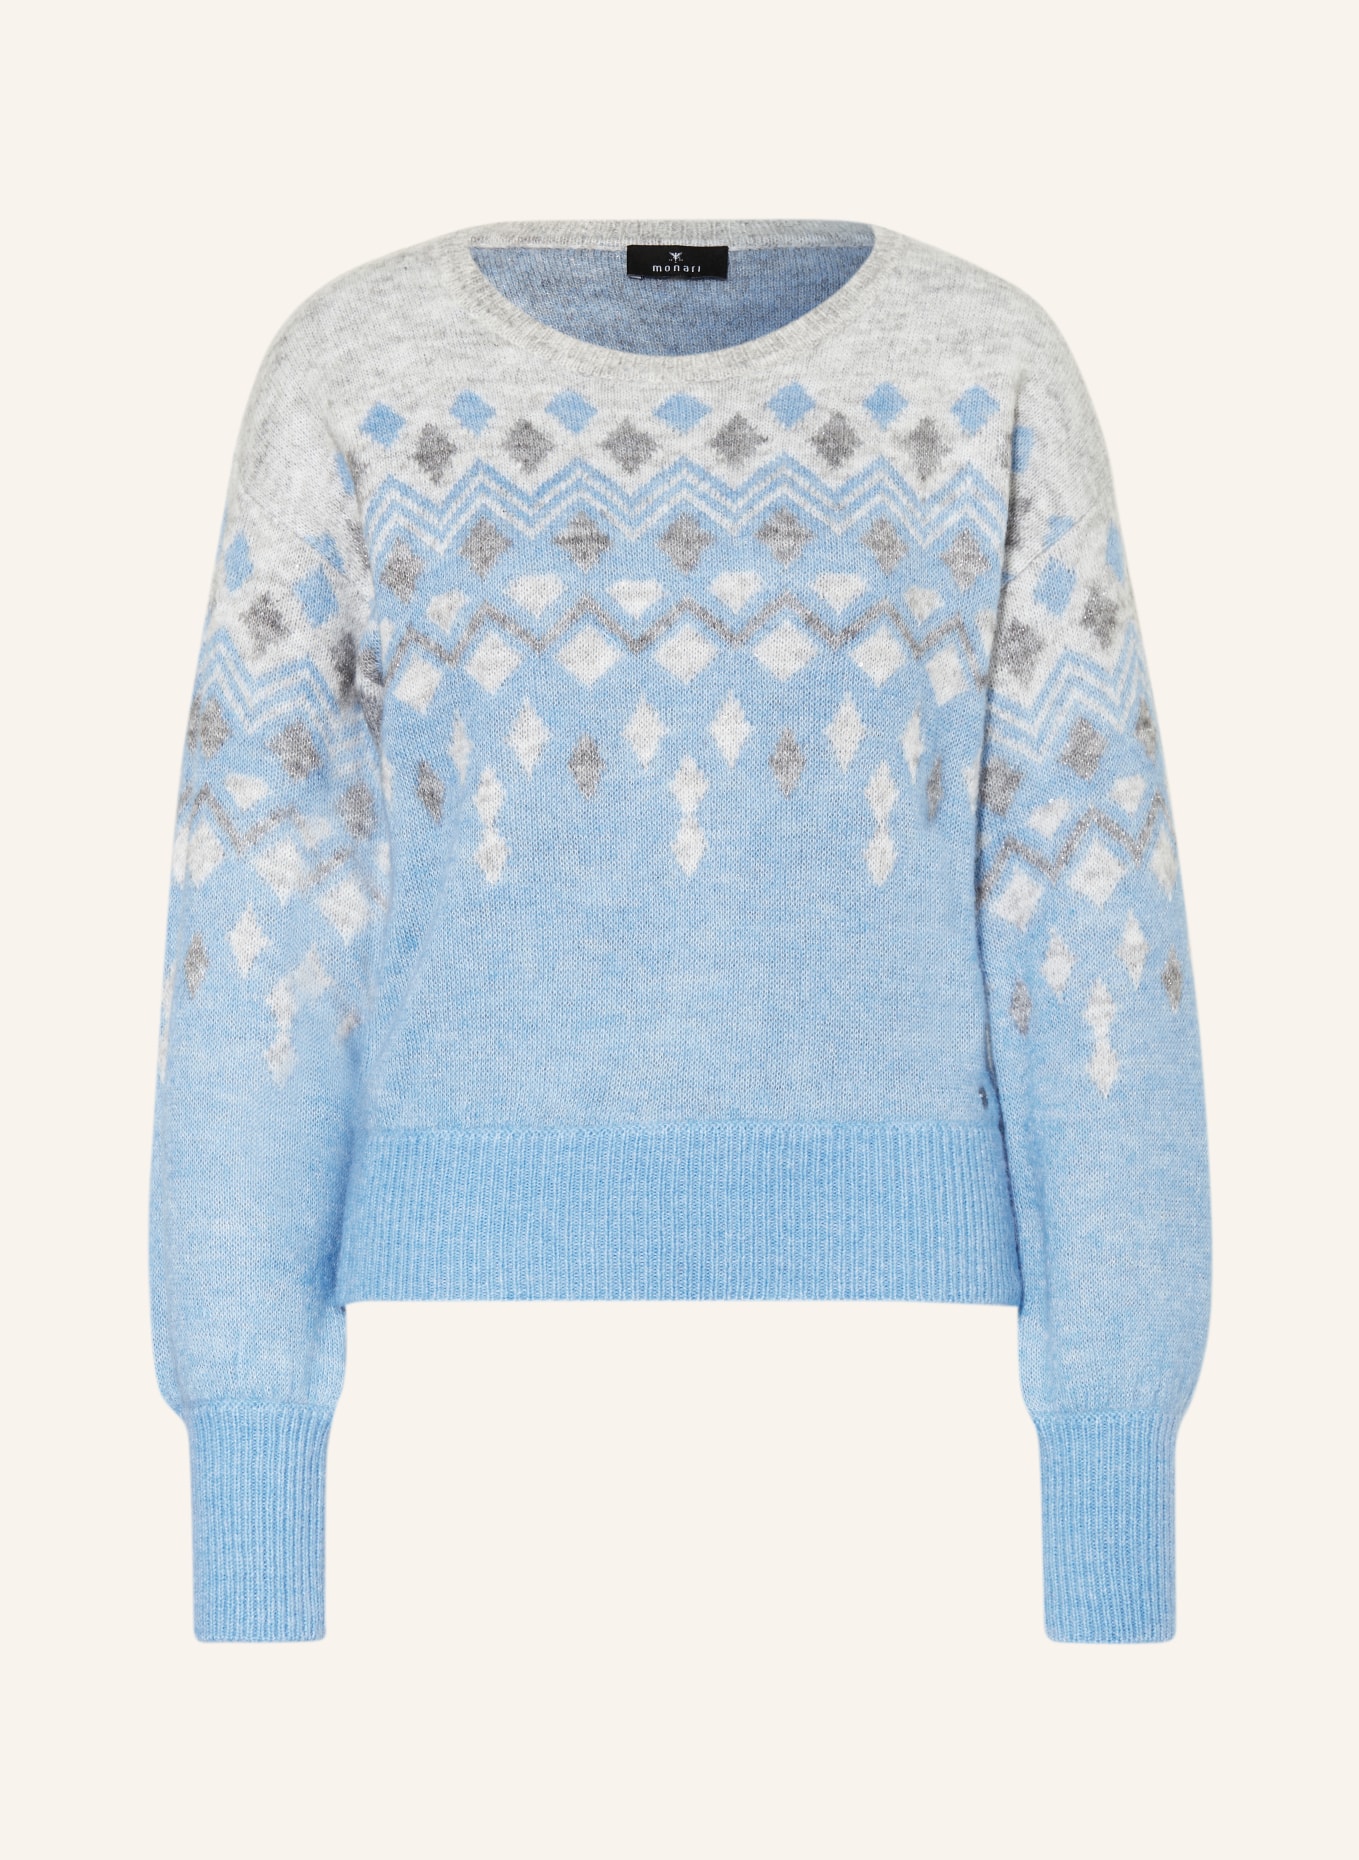 monari Sweater with sequins, Color: LIGHT BLUE/ LIGHT GRAY/ DARK GRAY (Image 1)